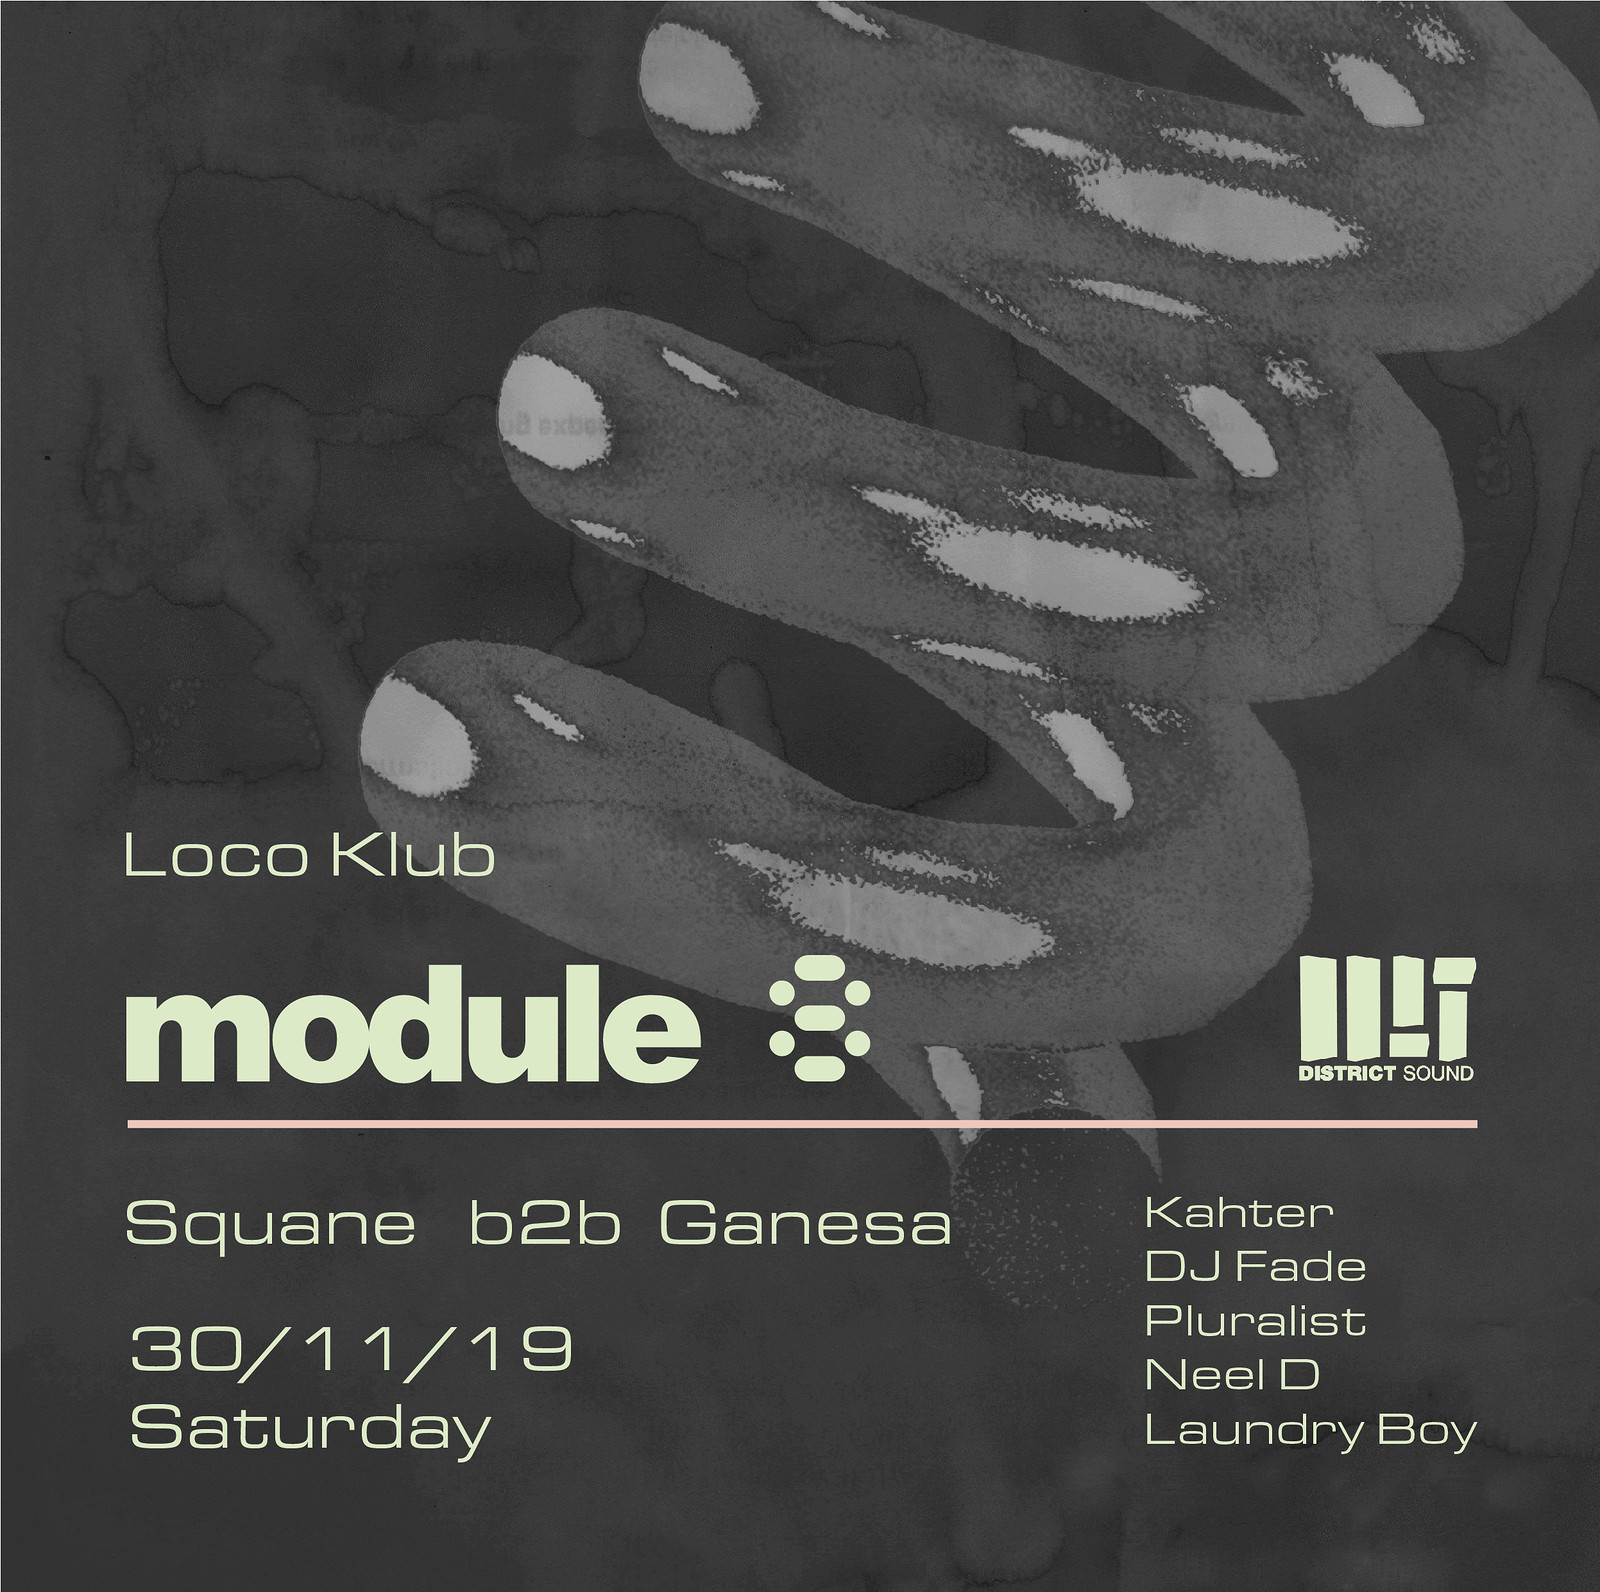 Module 8 x District Sound: Squane b2b Ganesa at The Loco Klub